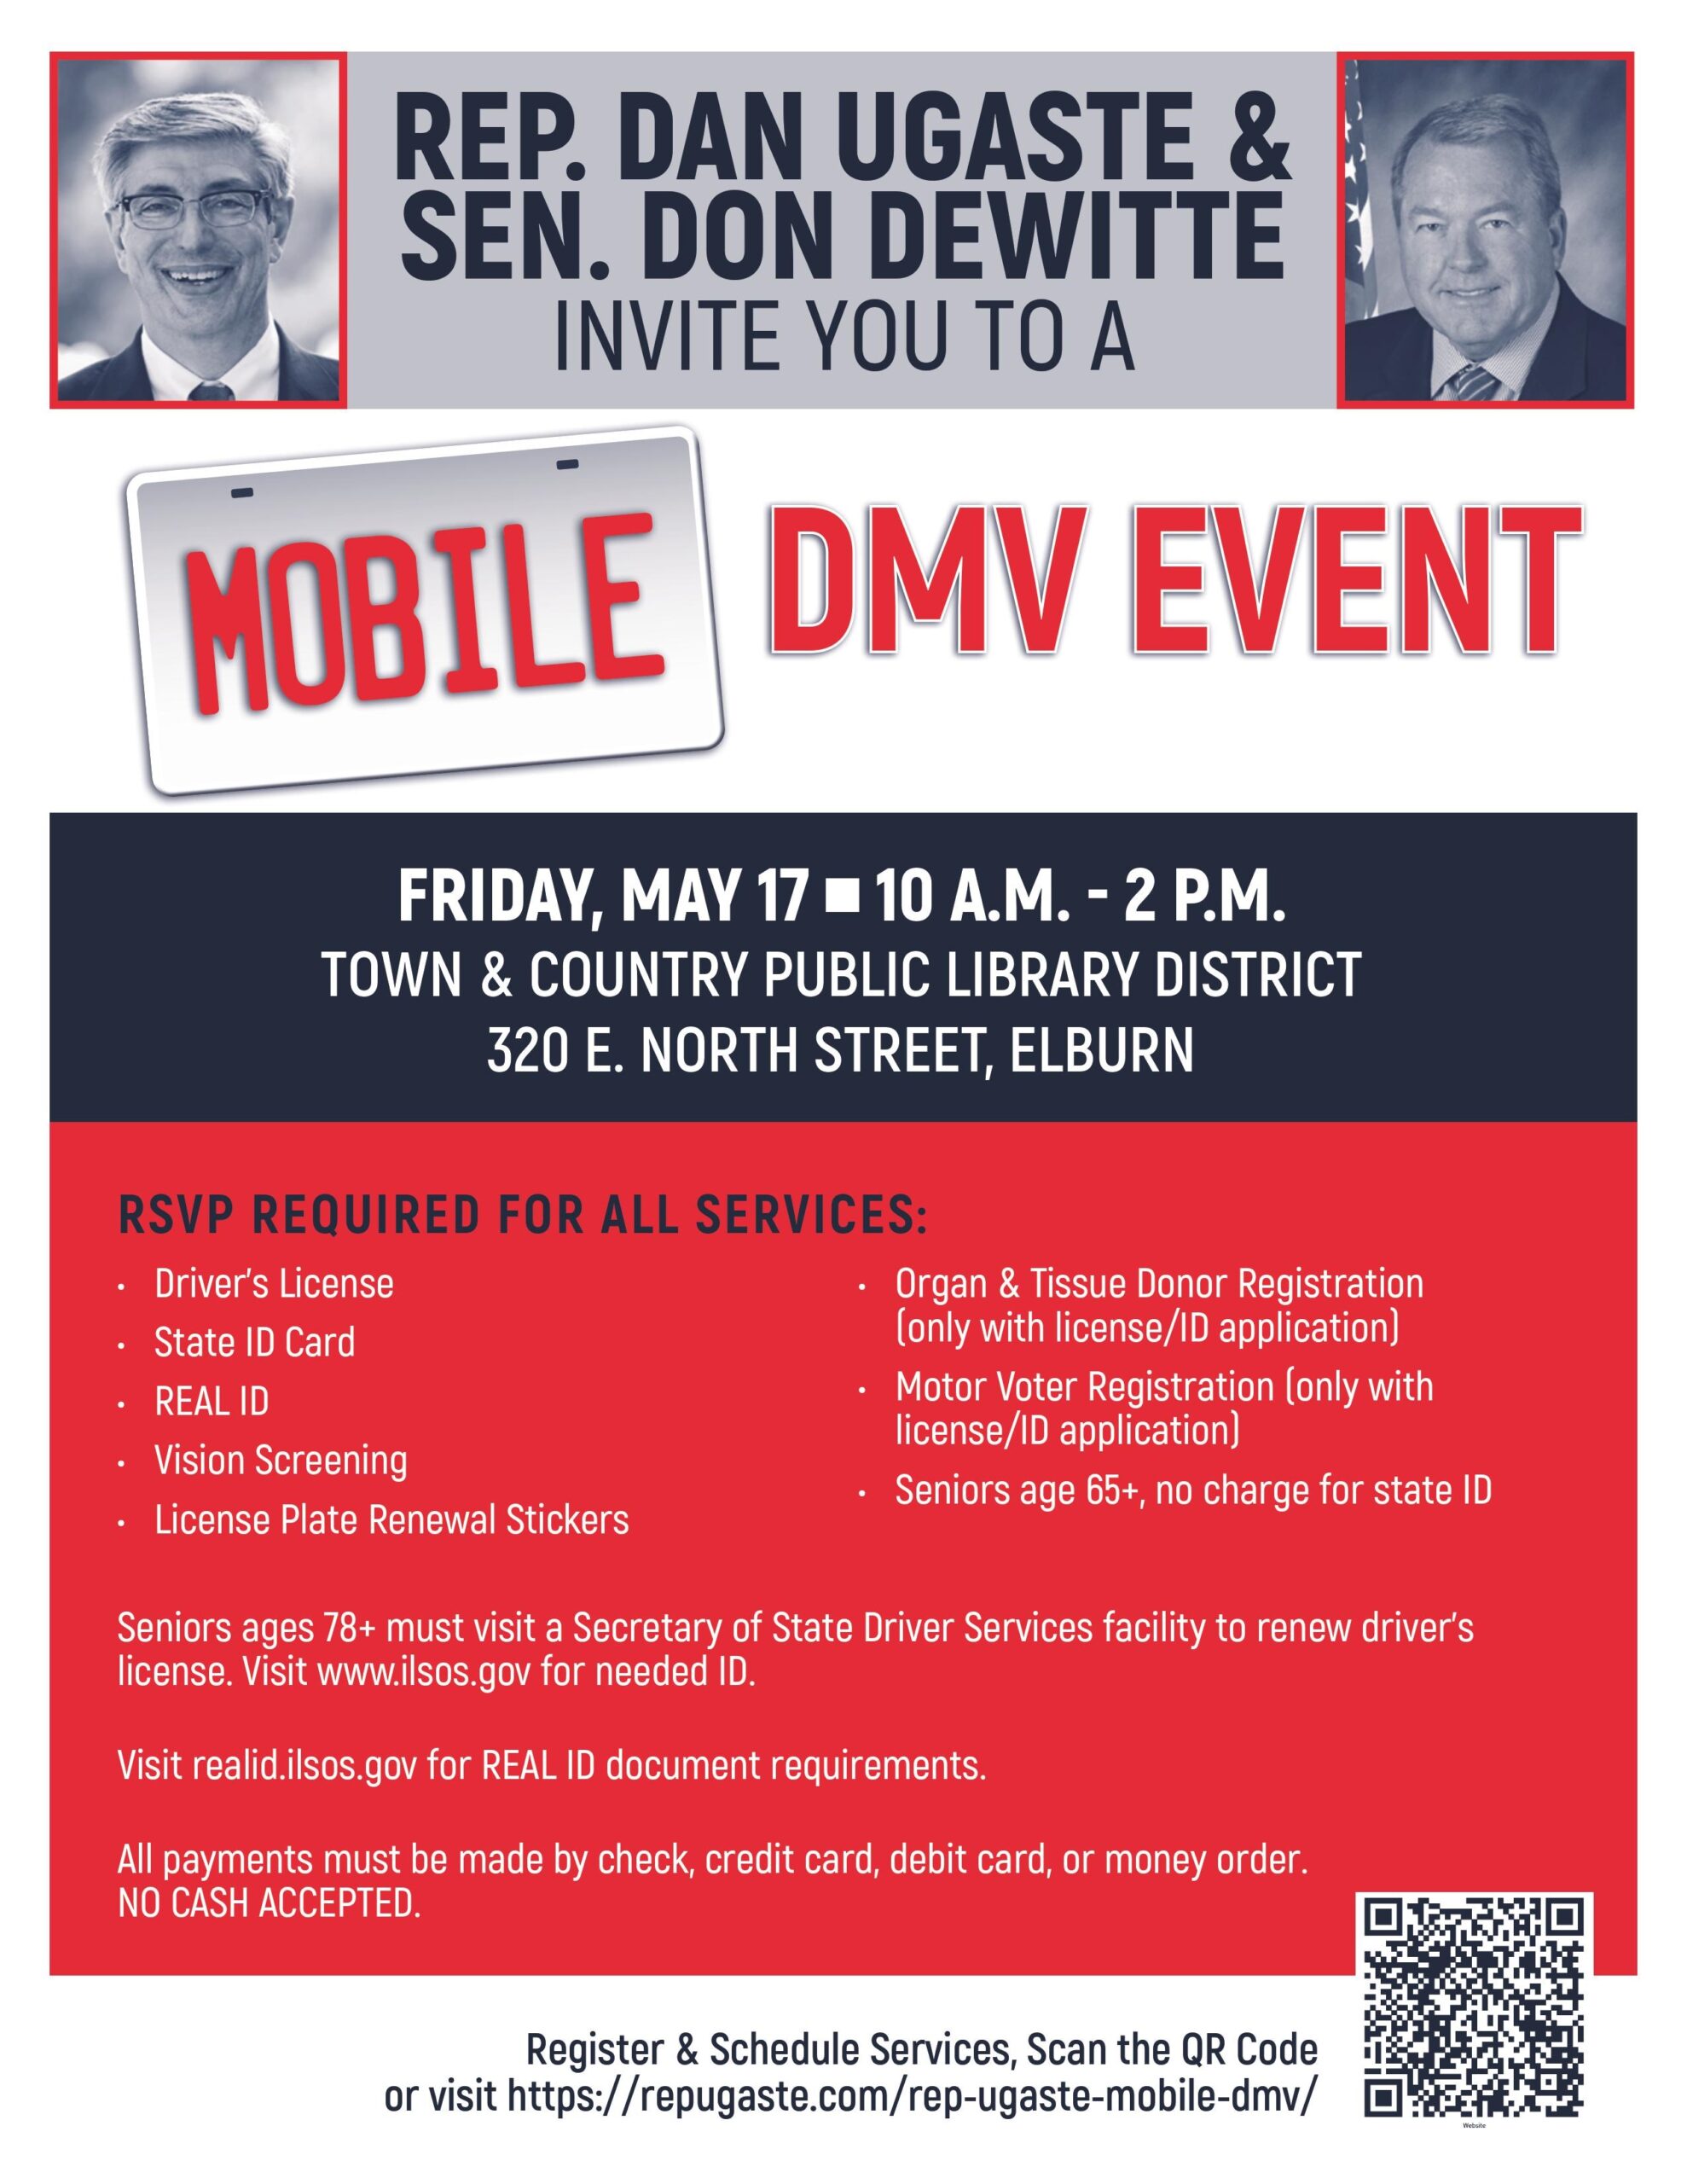 Mobile DMV Event